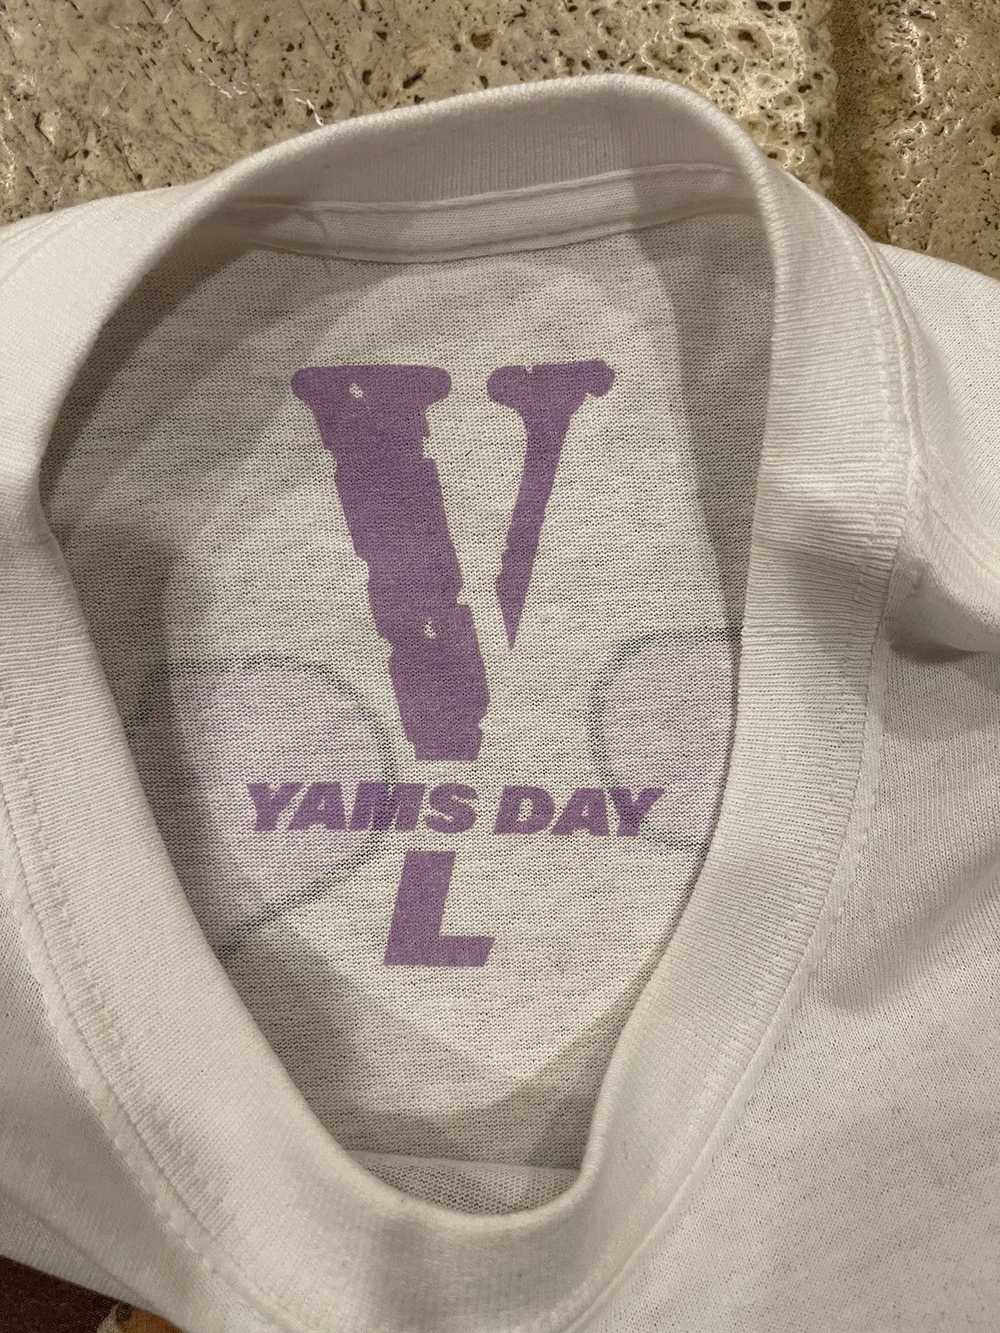 Vlone Vlone A$AP Yams Day OG White Tee - image 7